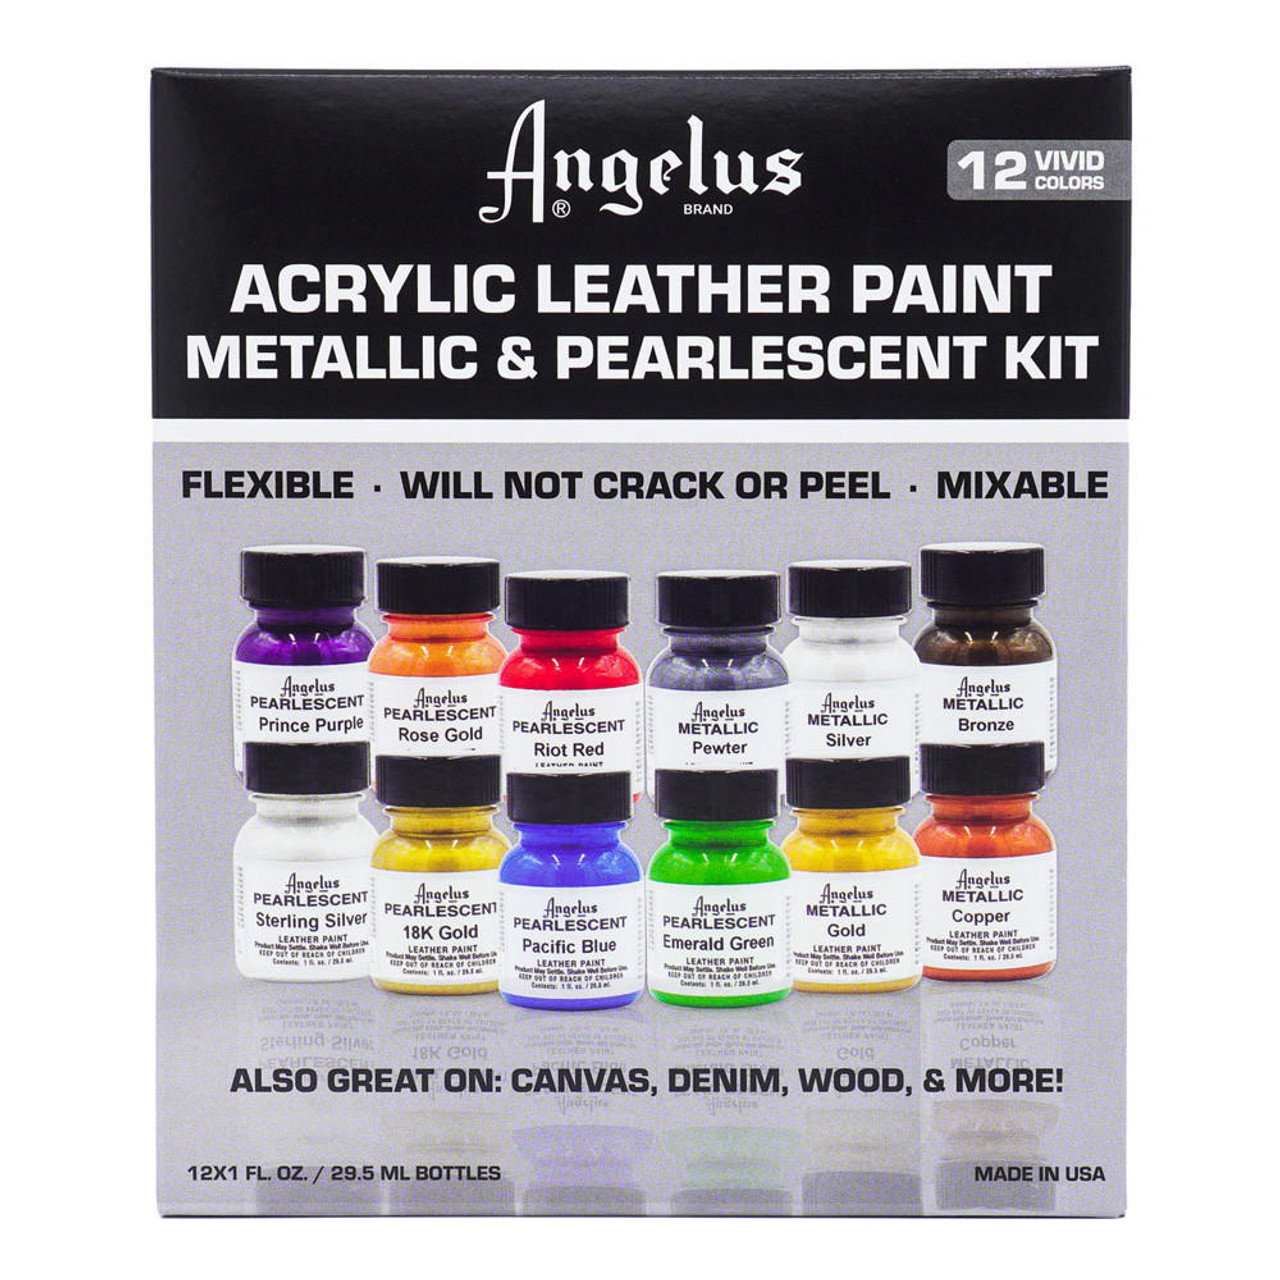 Angelus Acrylic Leather Paint - Montana Leather Company